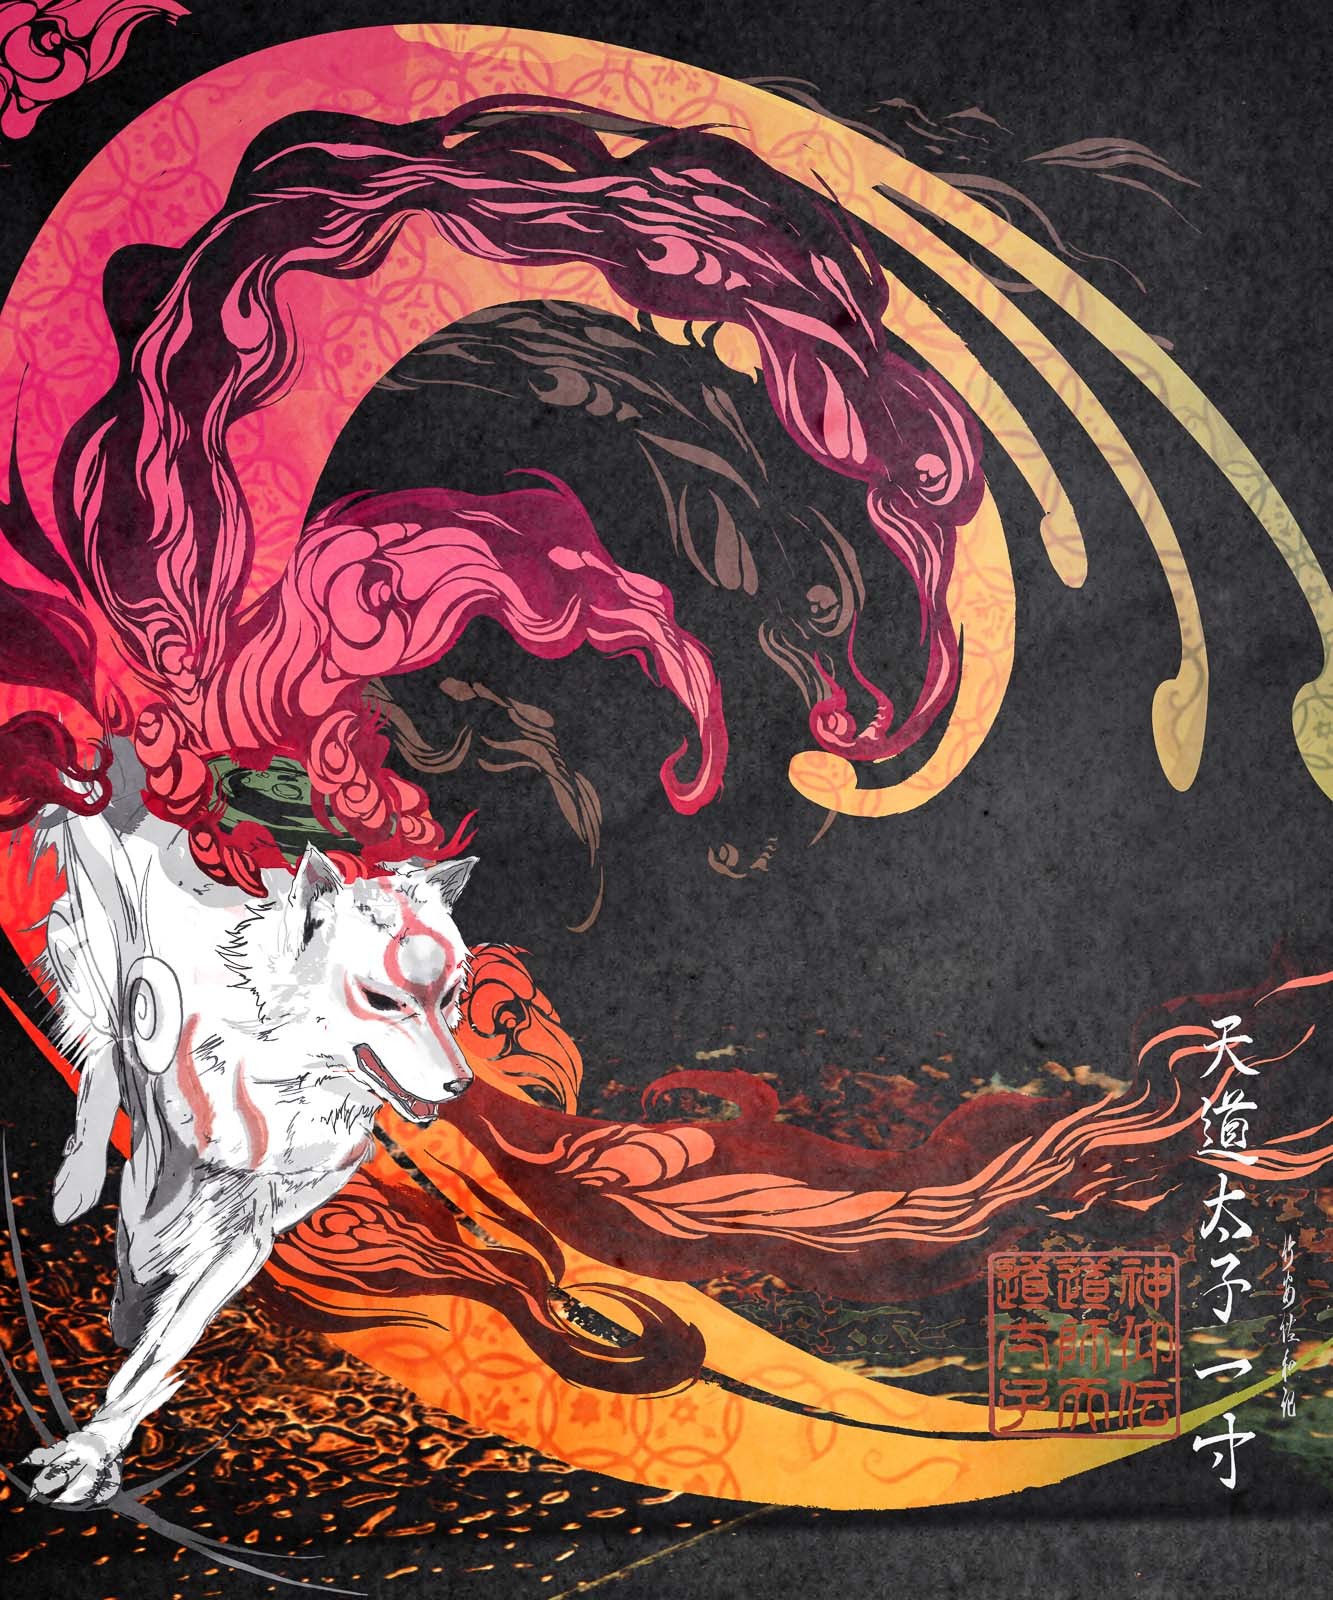 Okami HD cover Art Print by Eptanu